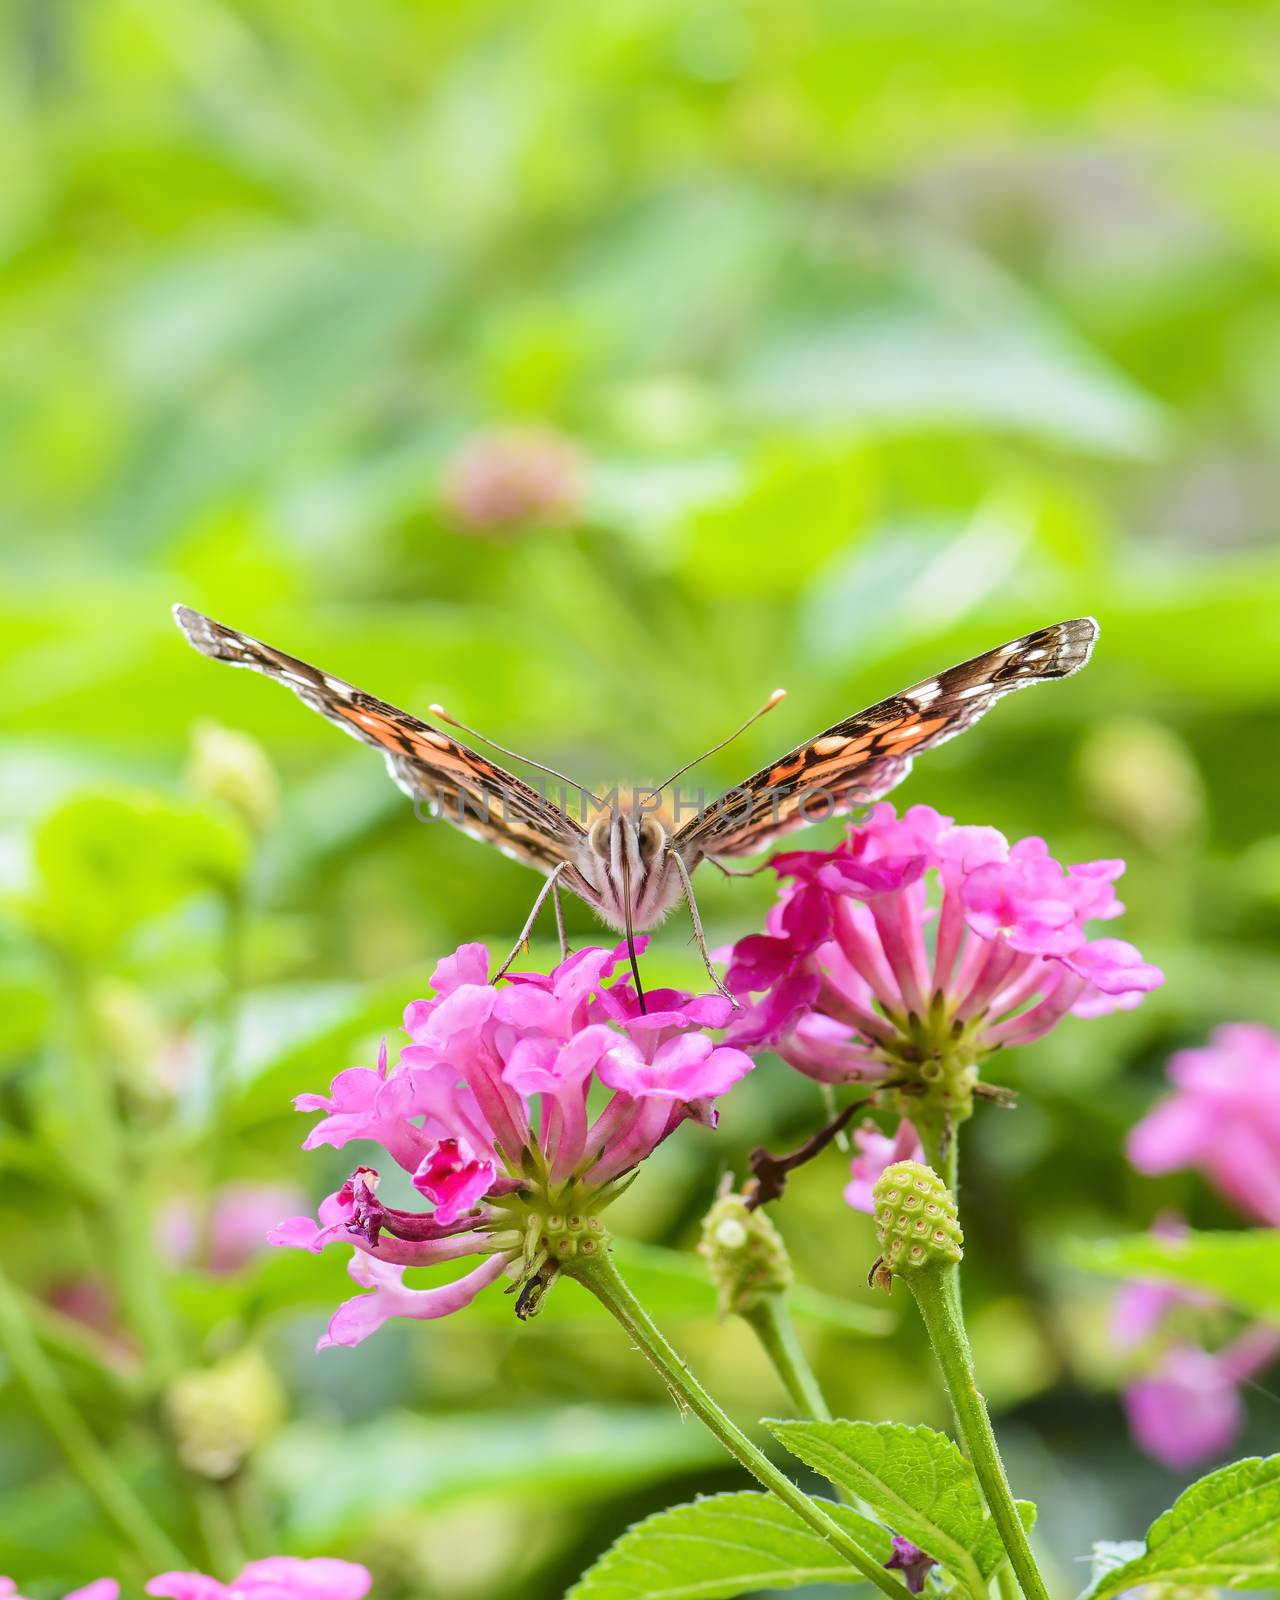 Feeding Butterfly by billberryphotography